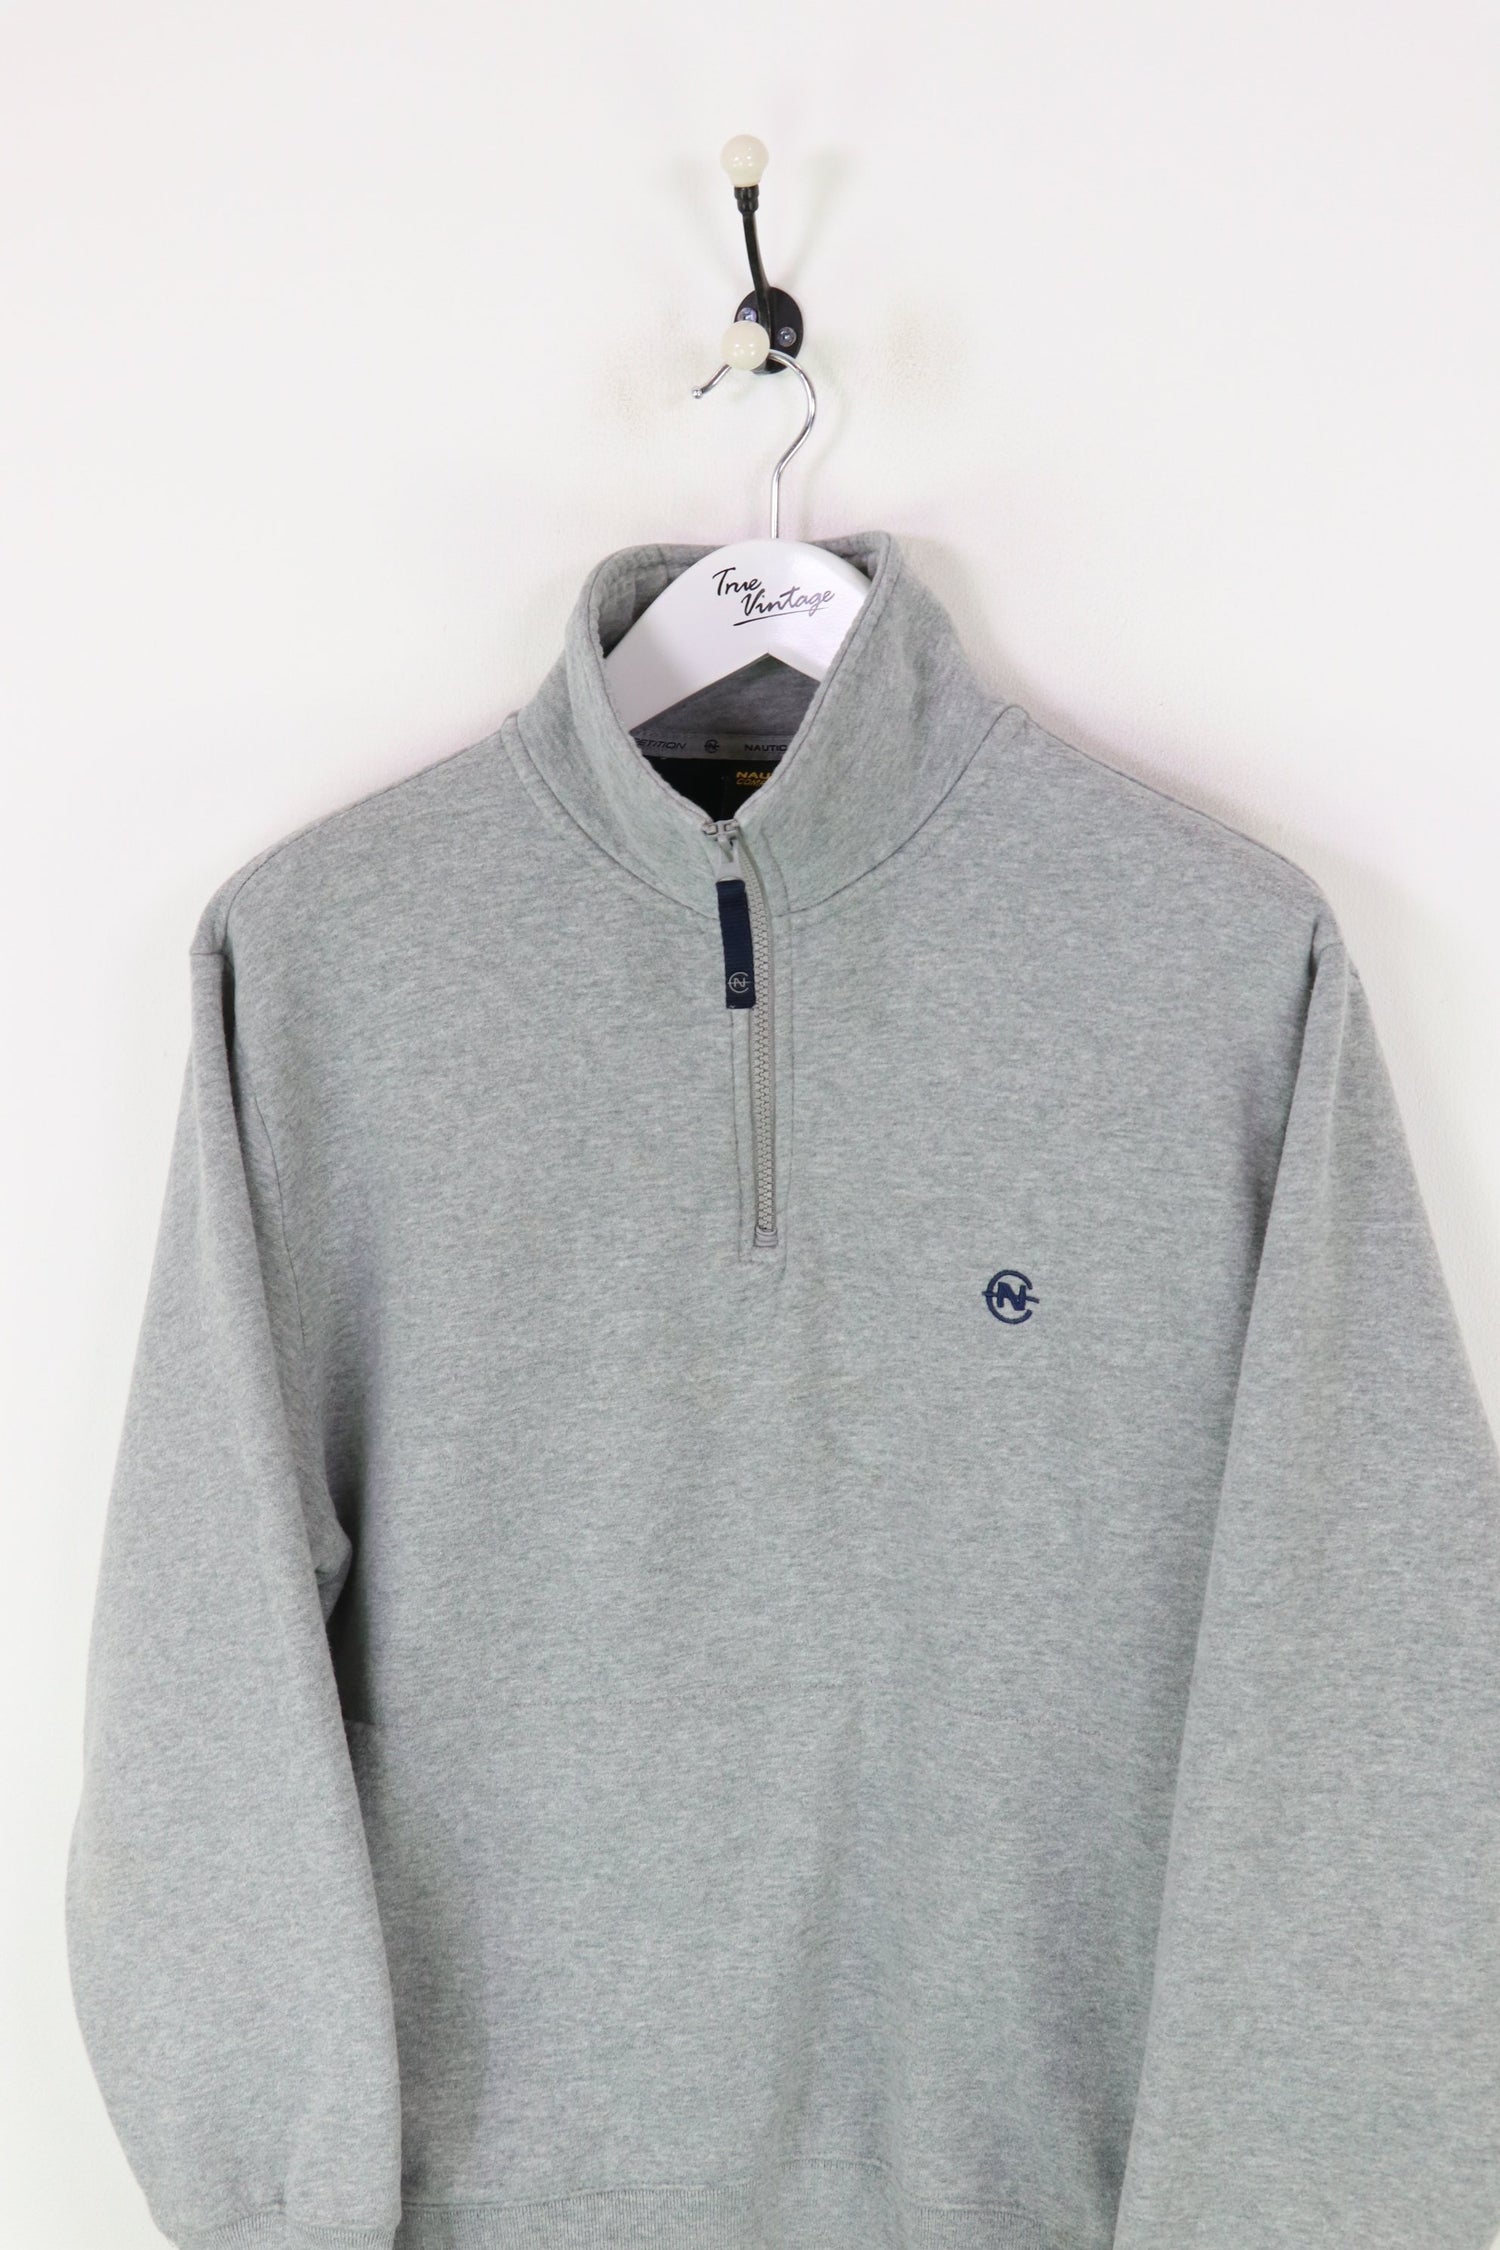 Nautica 1/4 Zip Sweatshirt Grey Large